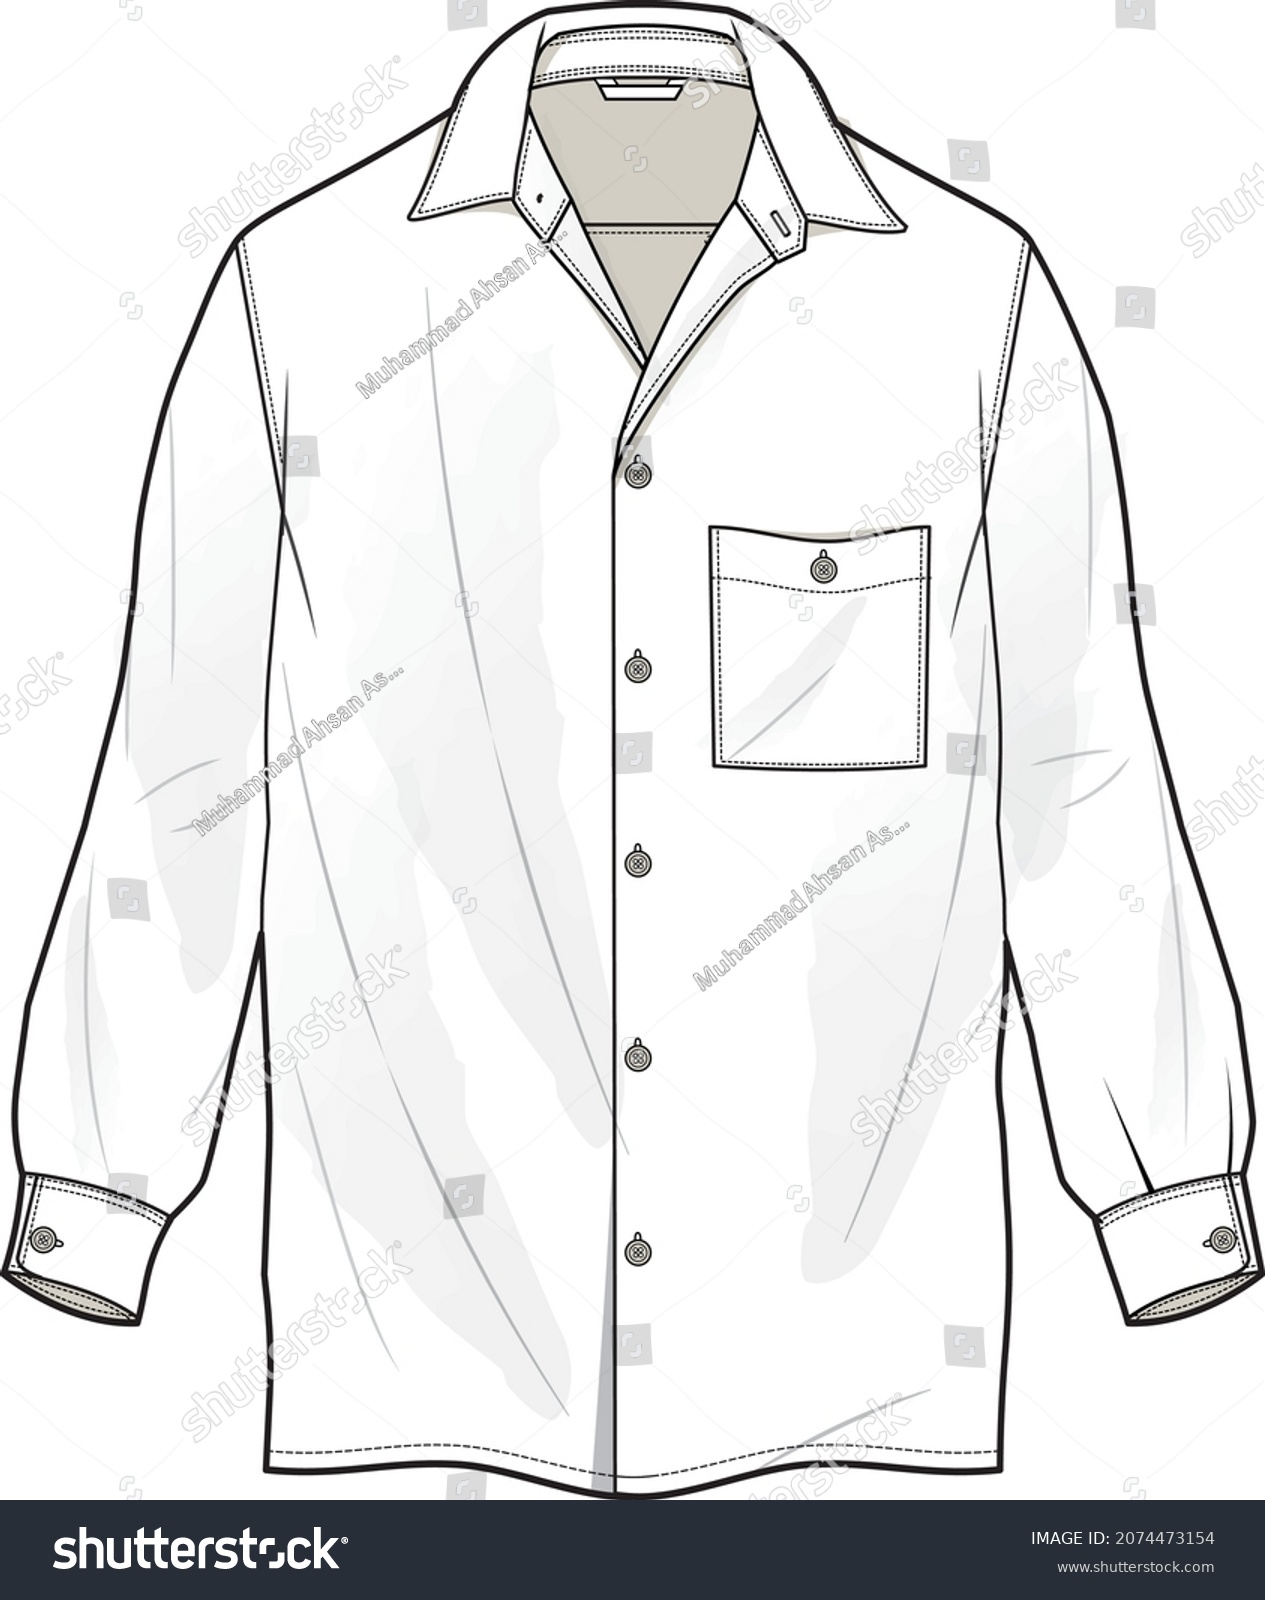 5,693 Formal shirt sketch Images, Stock Photos & Vectors | Shutterstock